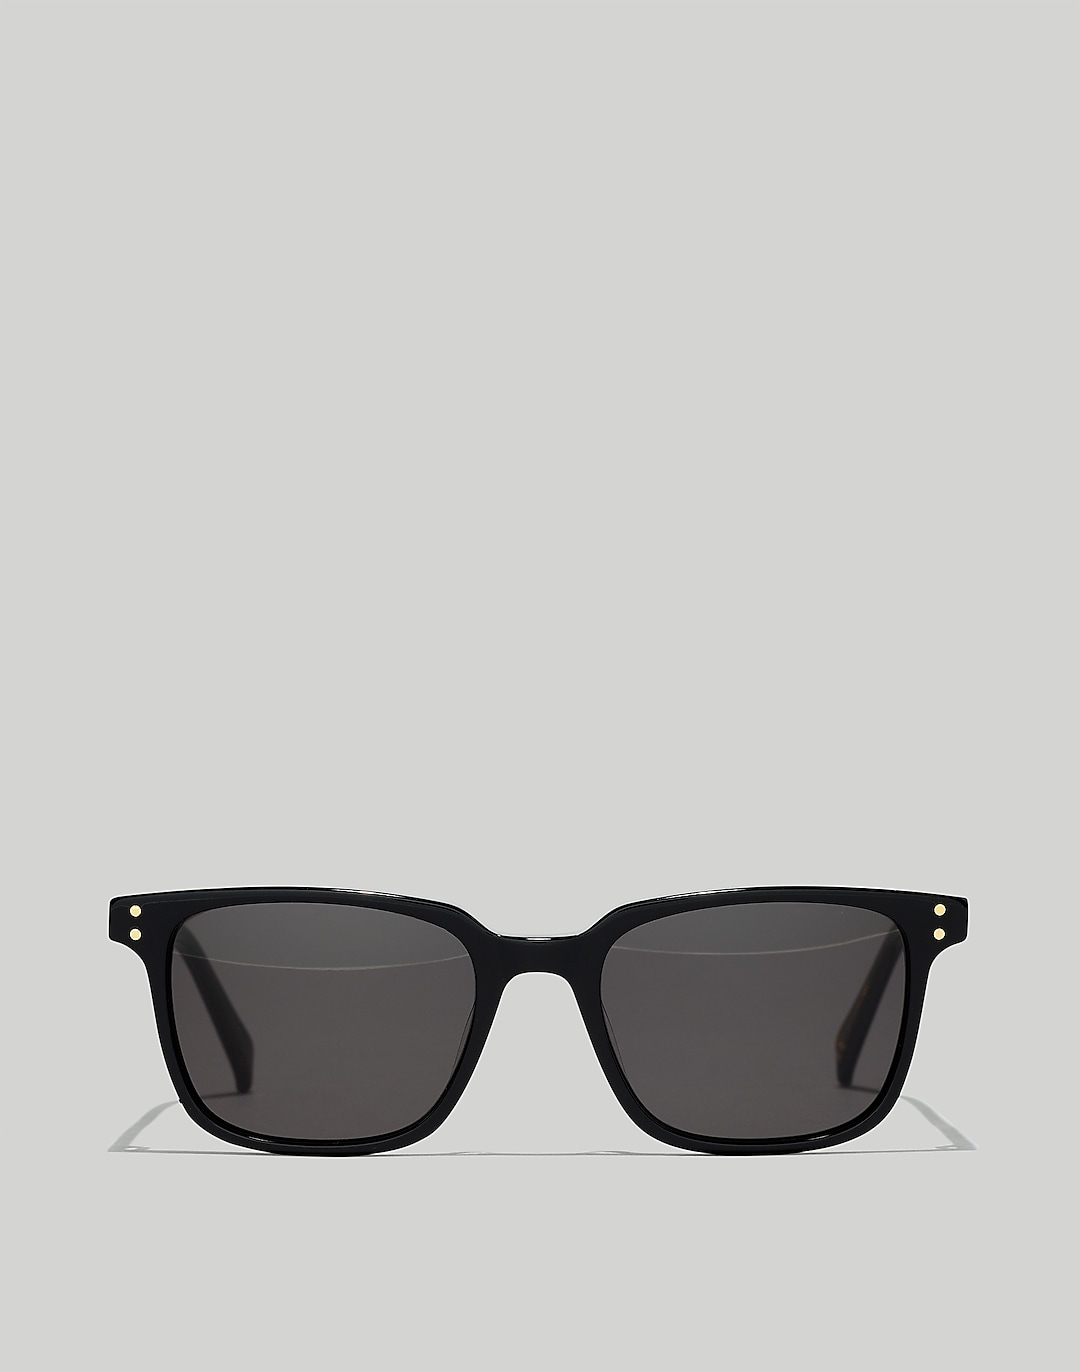 Ridgepoint Sunglasses | Madewell